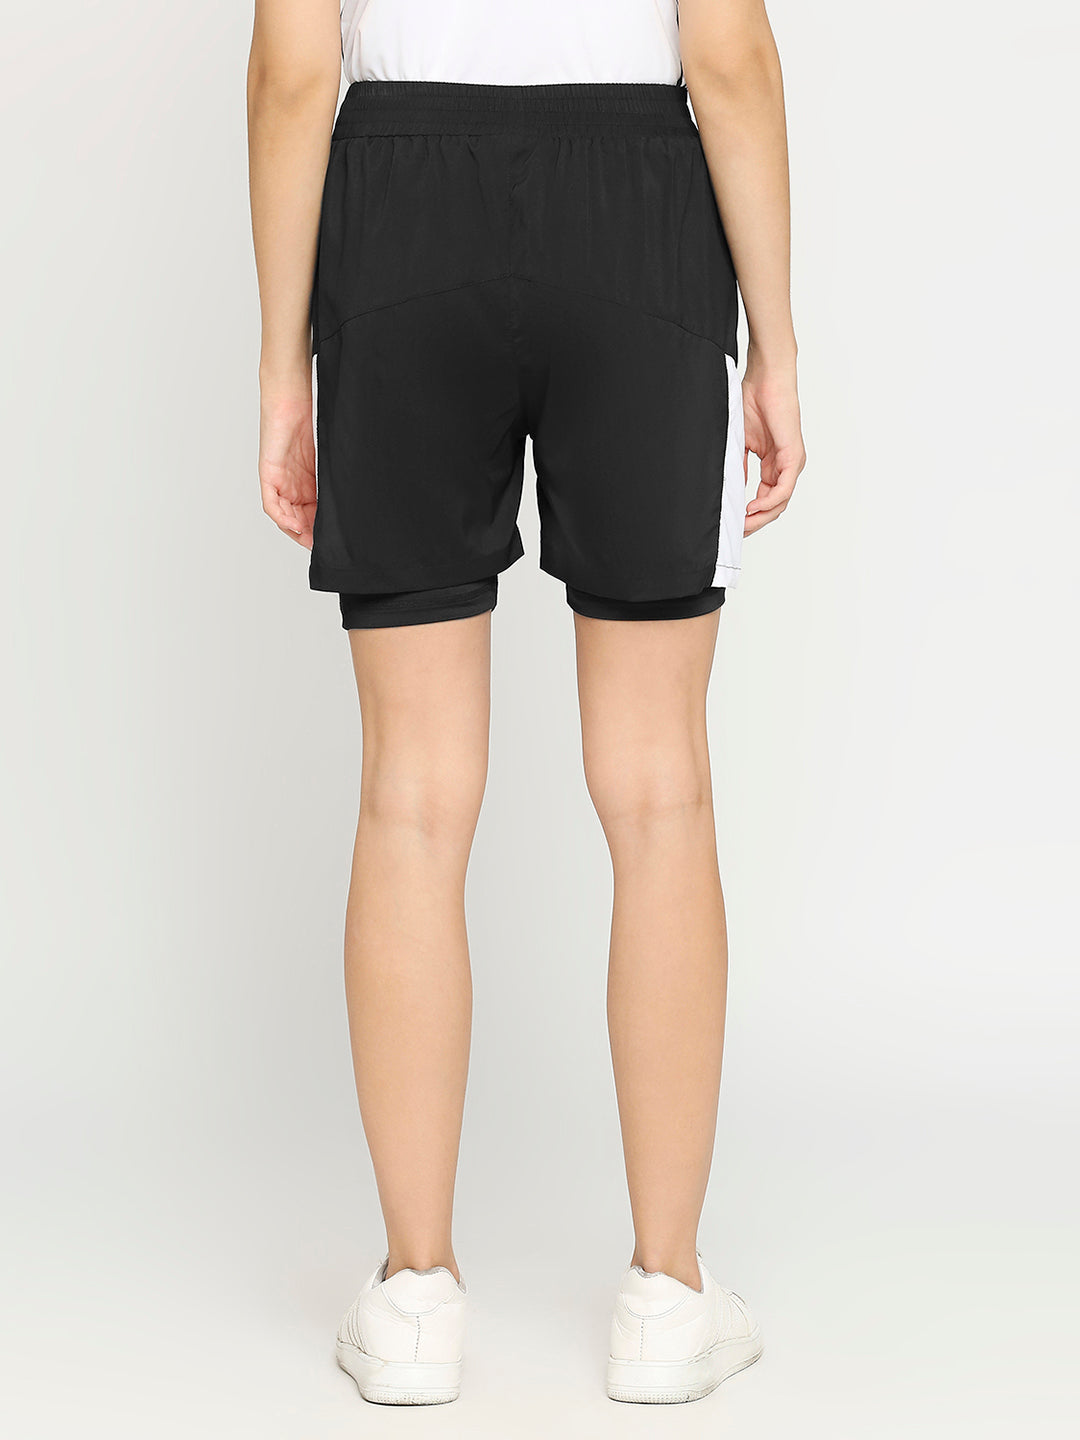 Women's Activewear Shorts - Black & White